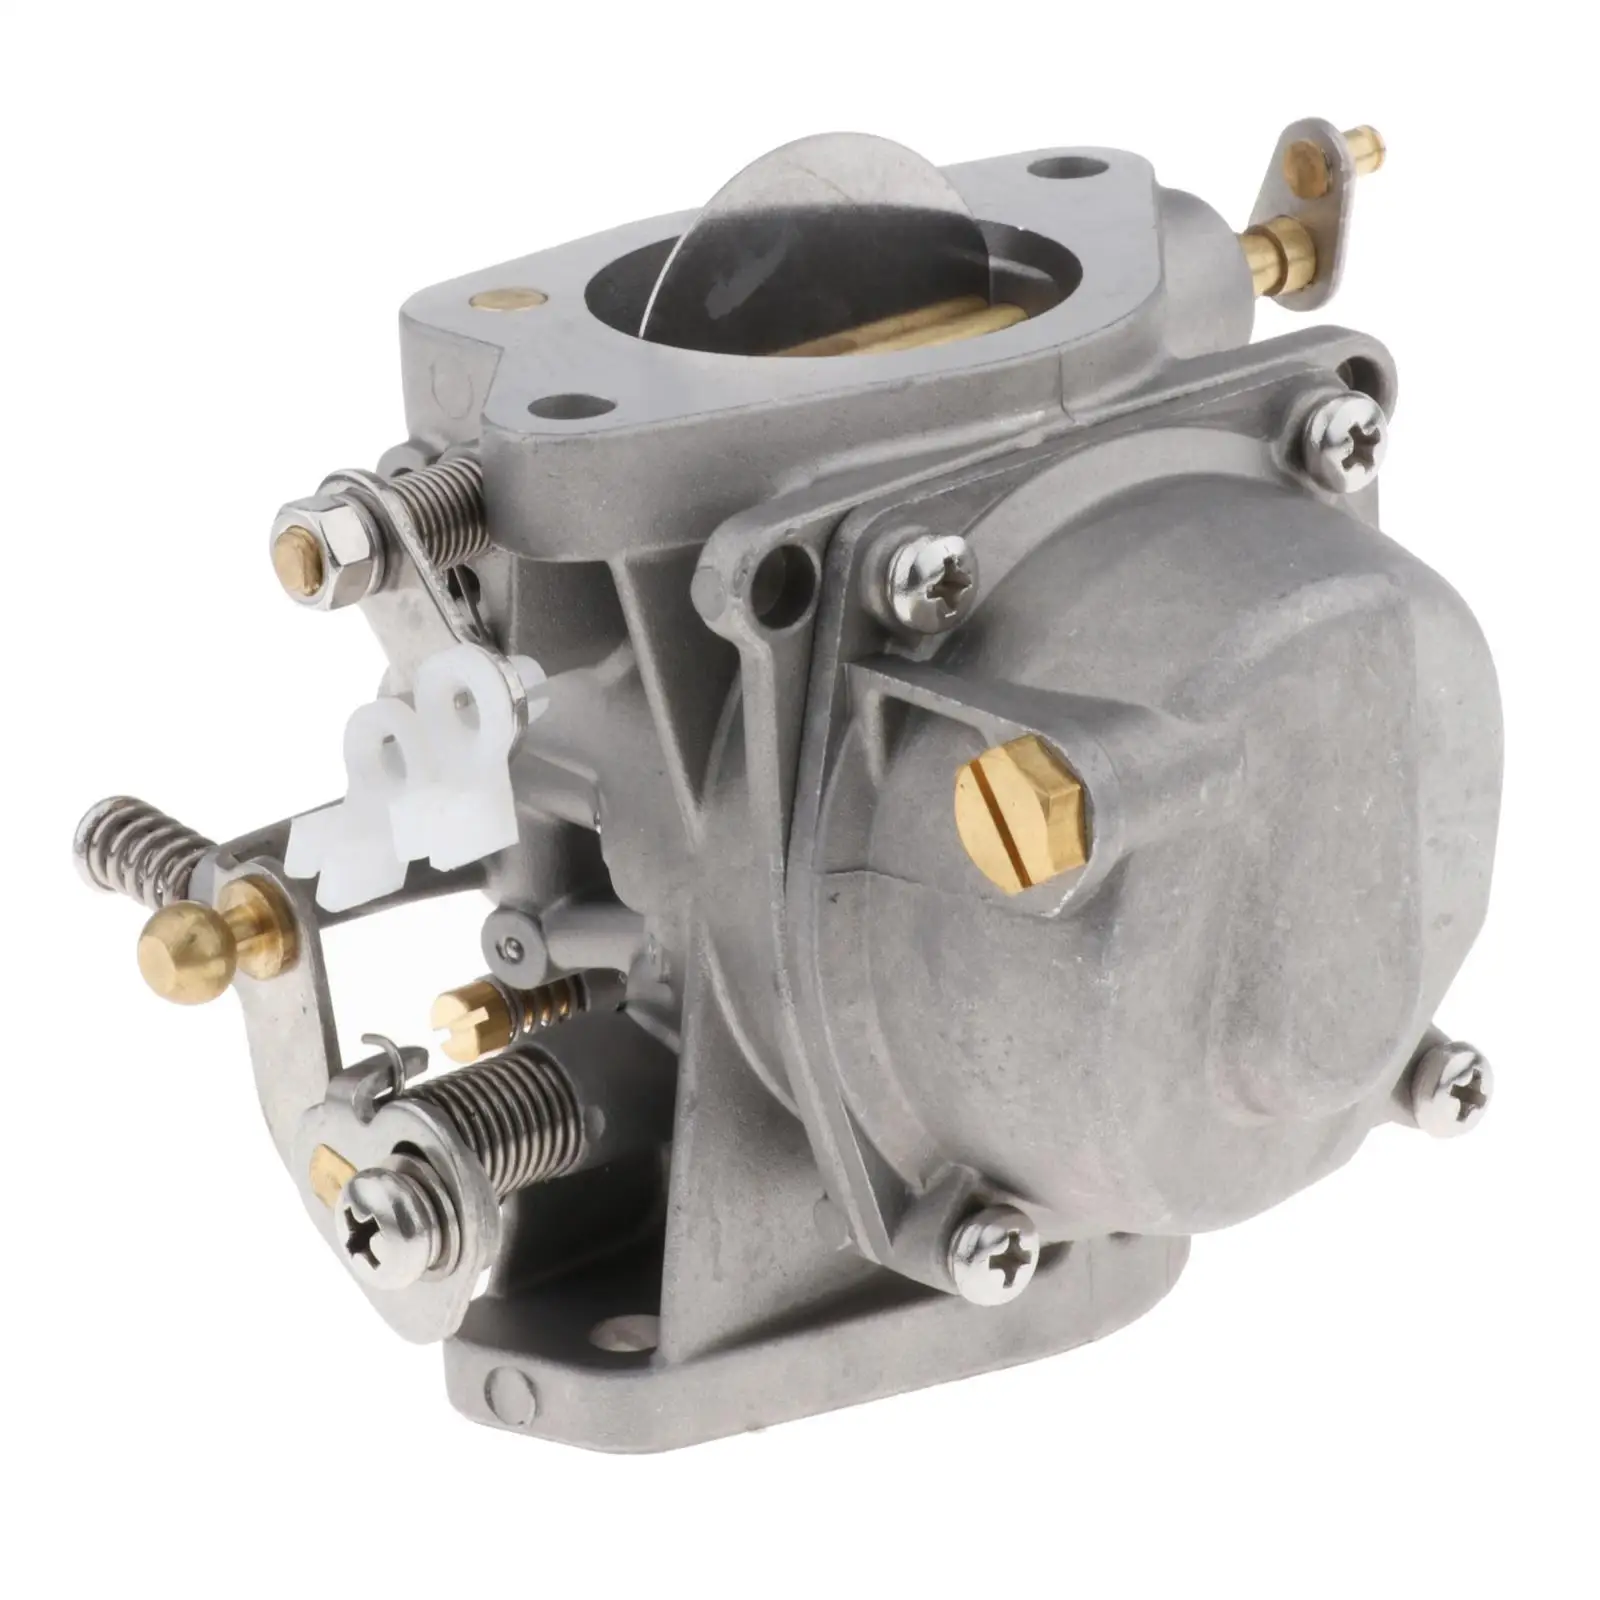 6K5-14301-02 6K5-14301 Middle Carburetor Portable For Yamaha 60HP E60M Parsun T60 Stroke Marine Engine